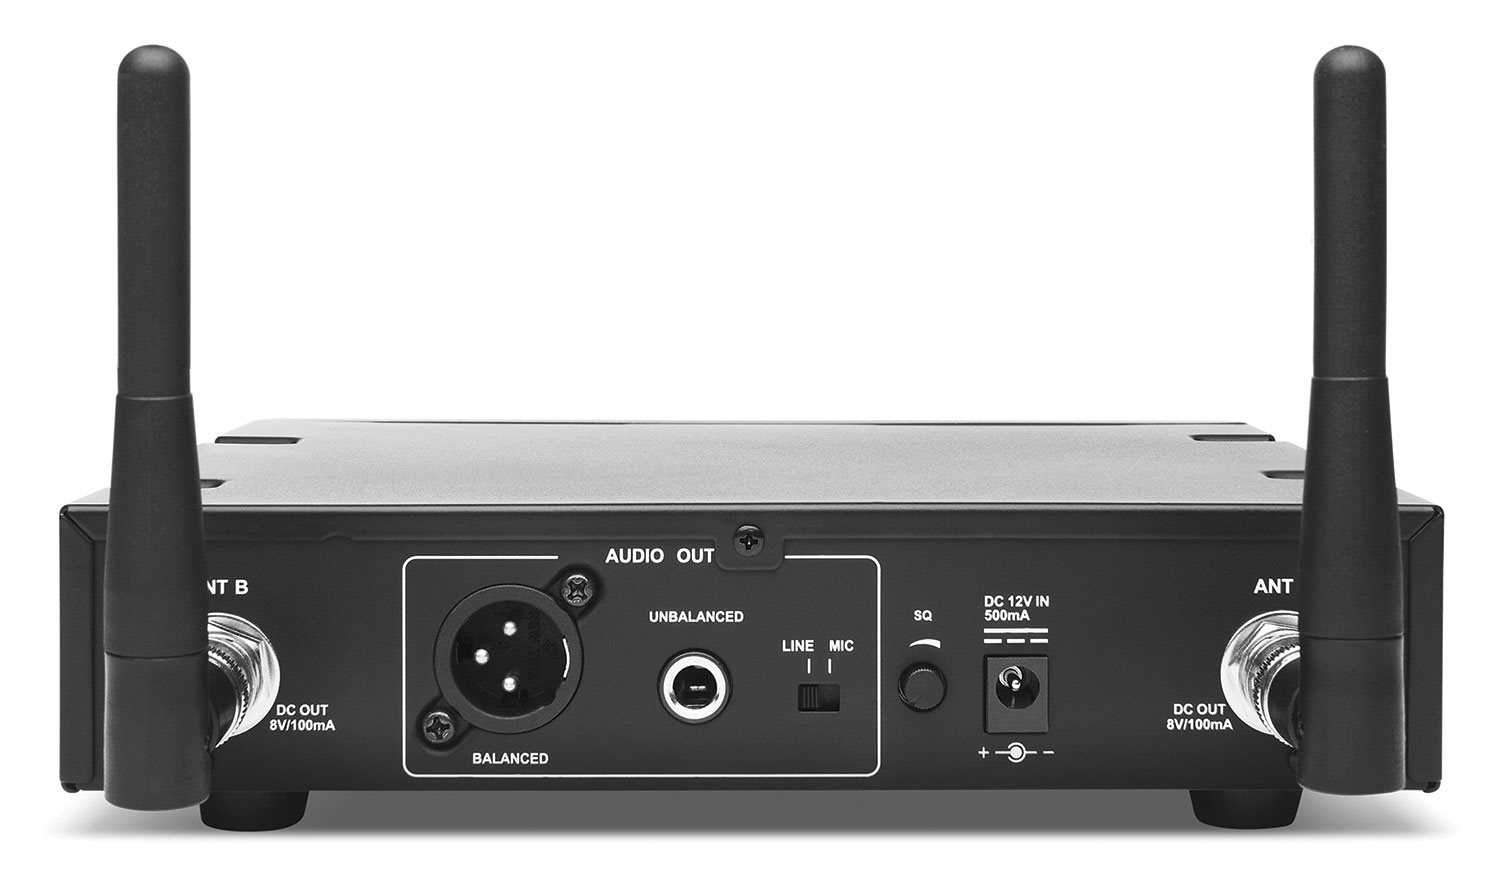 Alto Professional RADIUS 200 UHF Wireless Handheld Microphone - PSSL ProSound and Stage Lighting